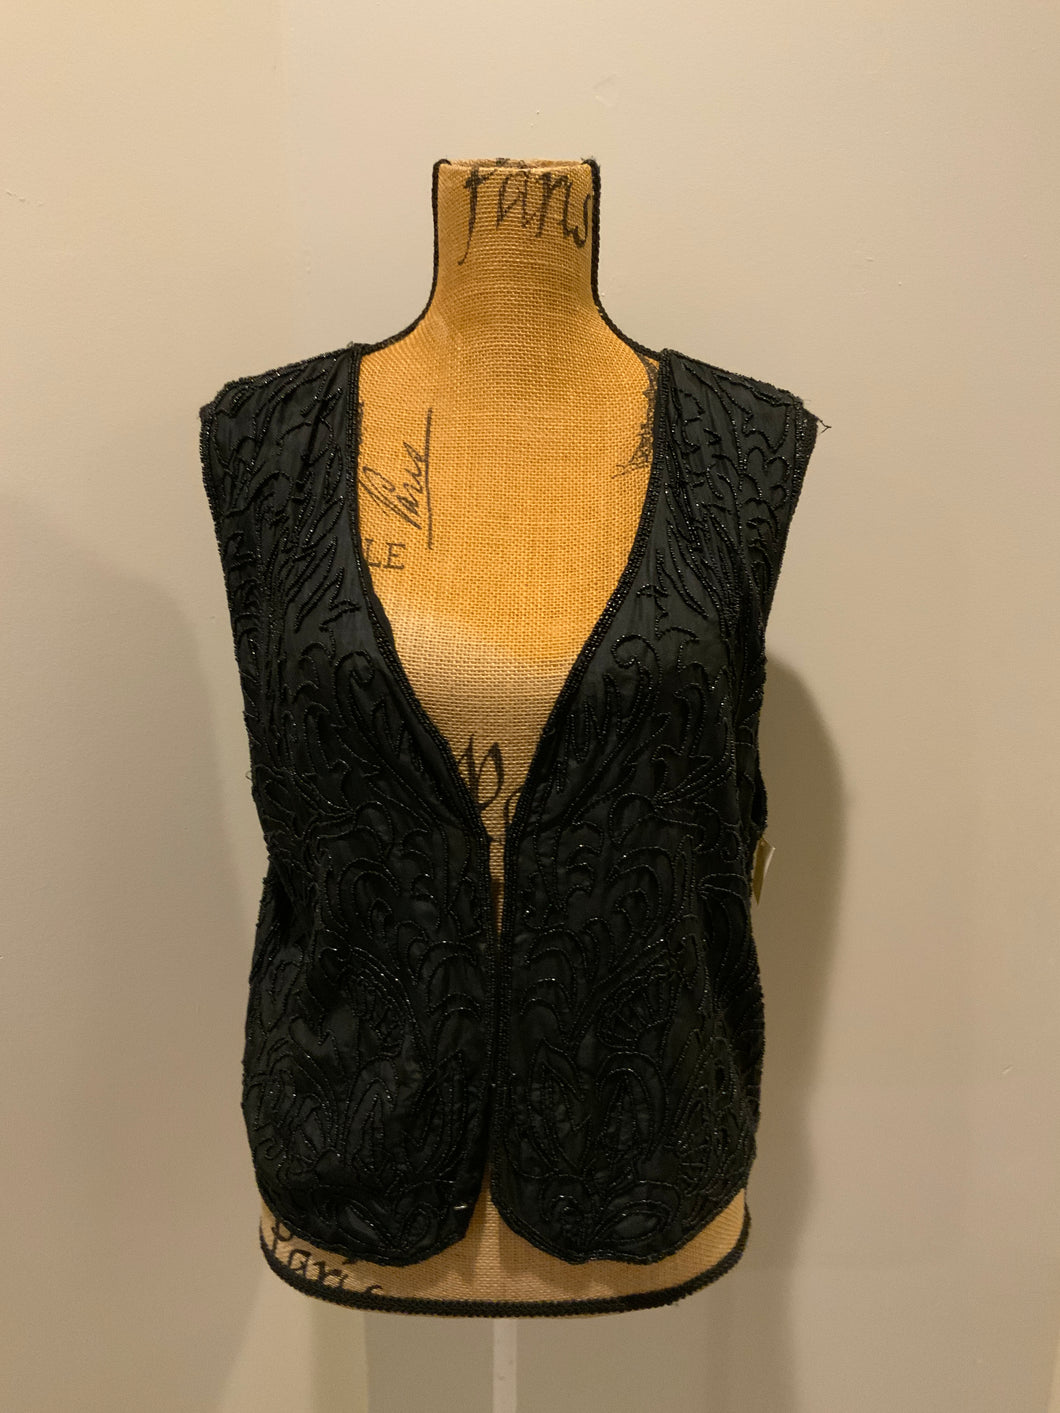 Kingspier Vintage - Black beaded vest with hook and eye closures.